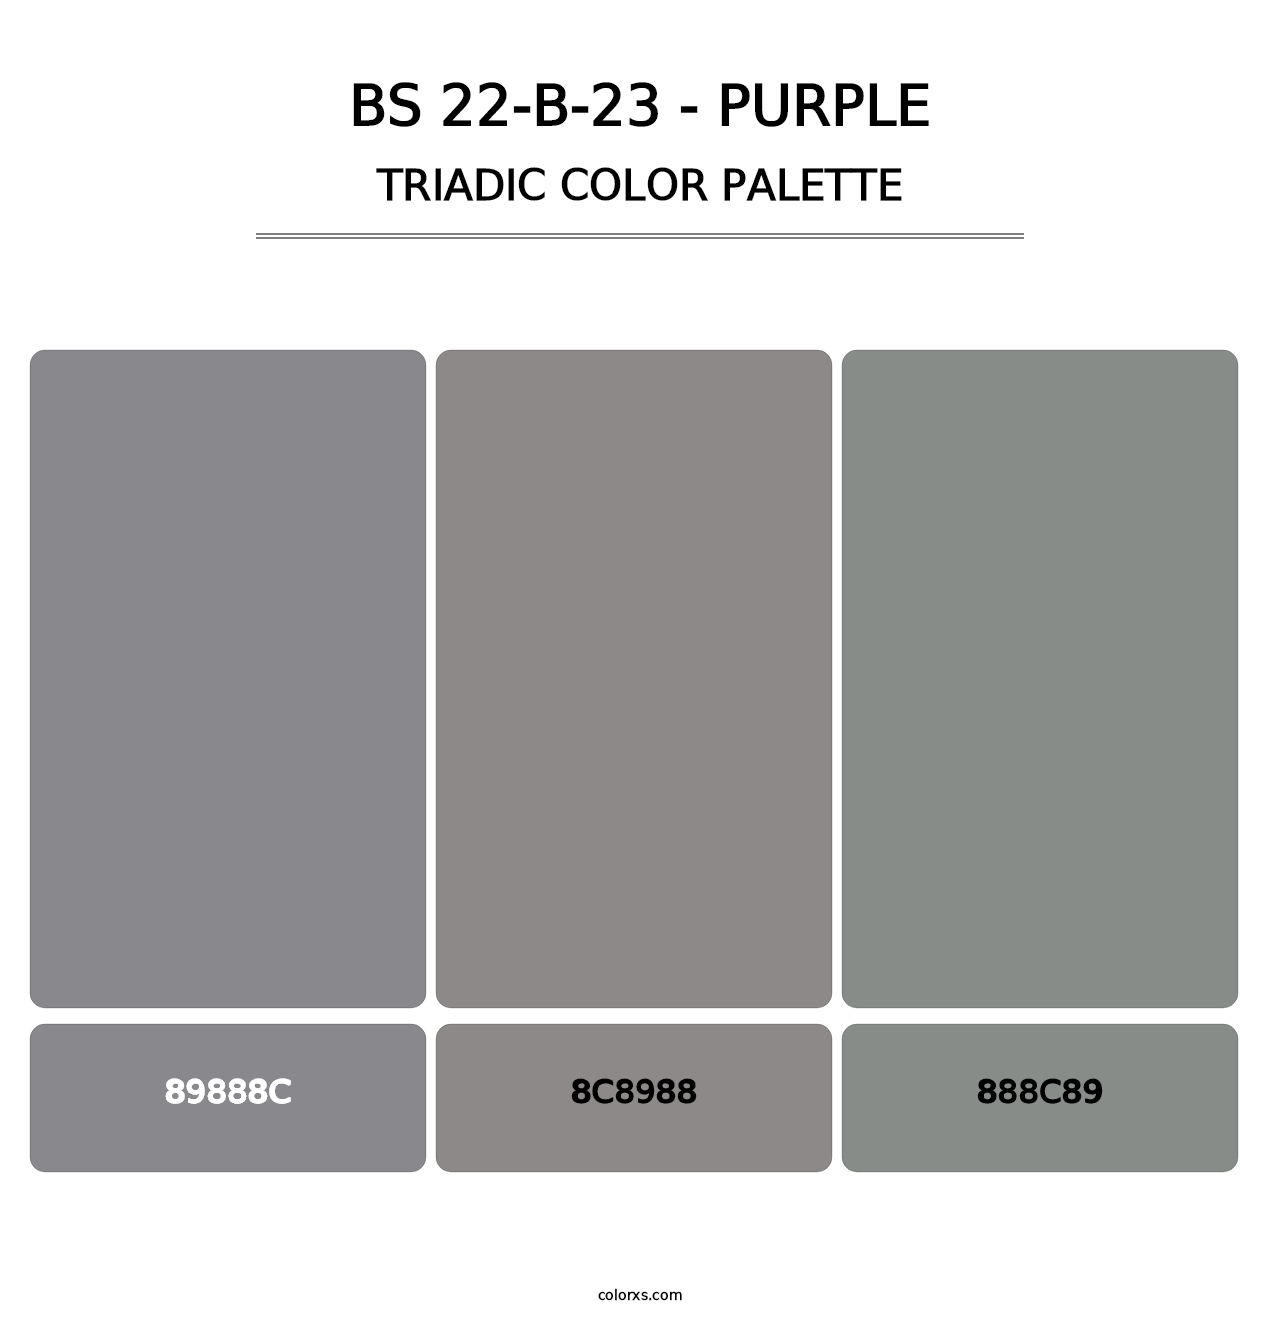 BS 22-B-23 - Purple - Triadic Color Palette